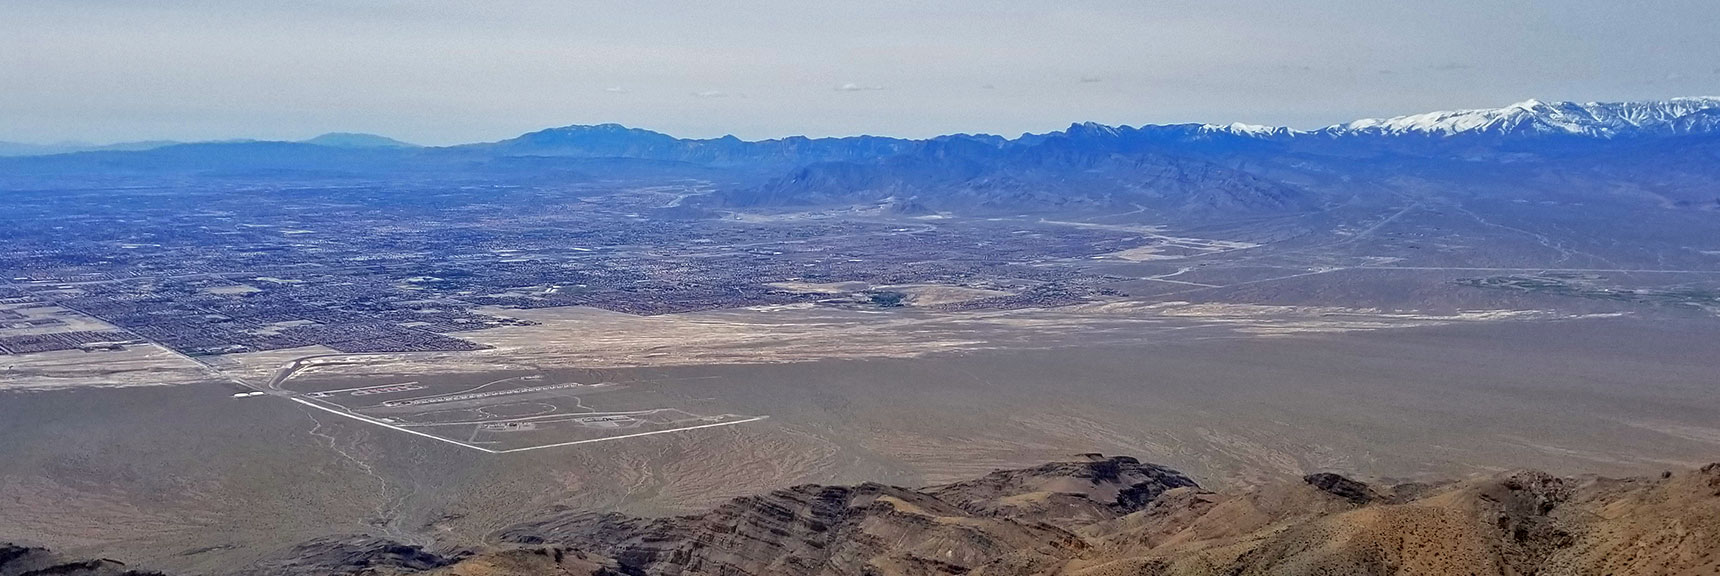 View of Northwestern Las Vegas from Near the Gass Peak Eastern Summit | Gass Peak Eastern Summit Ultra-marathon Adventure, Nevada